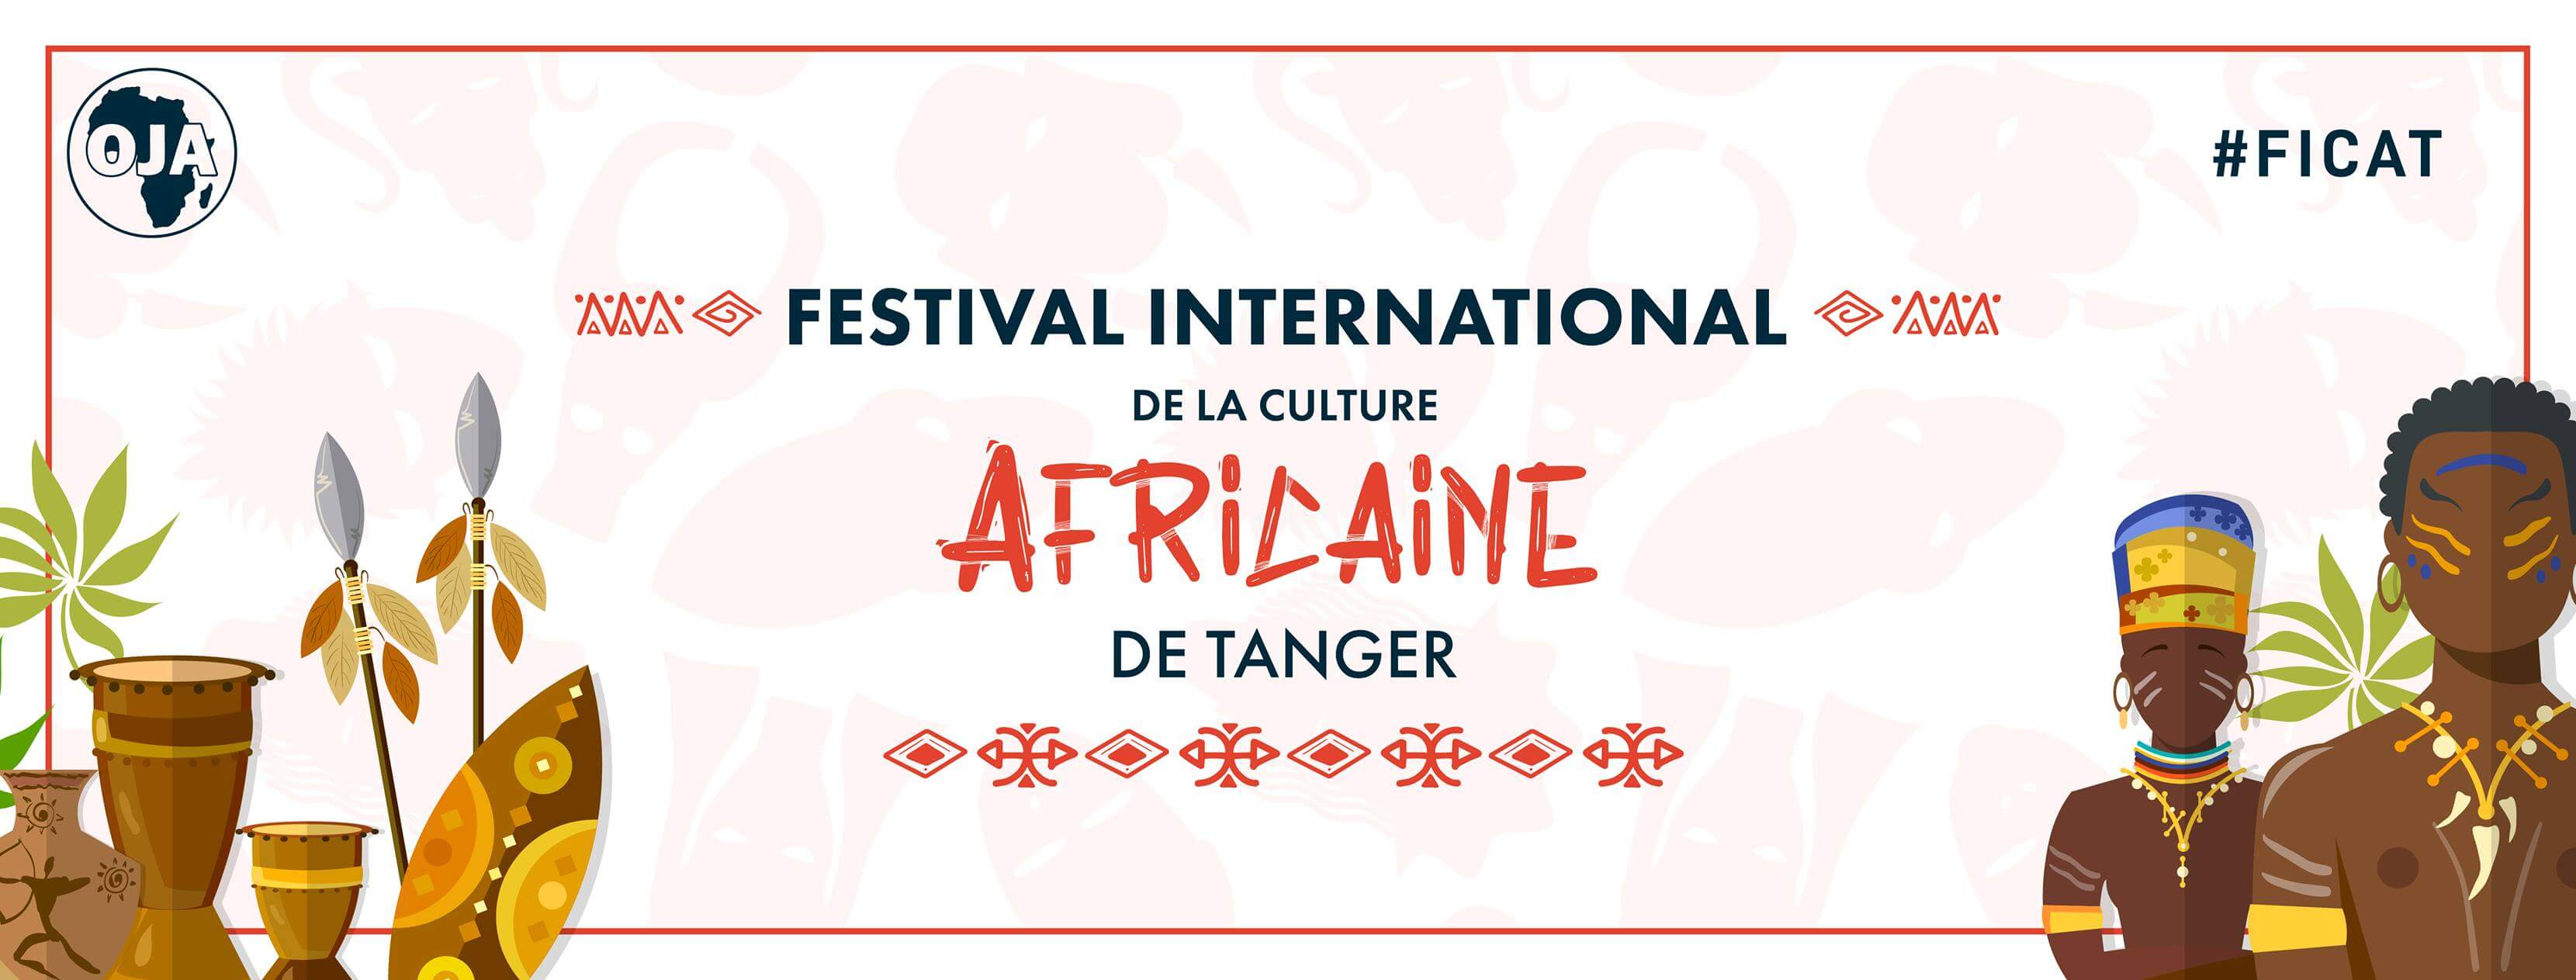 Festival International de la Culture Africaine de Tanger FICAT